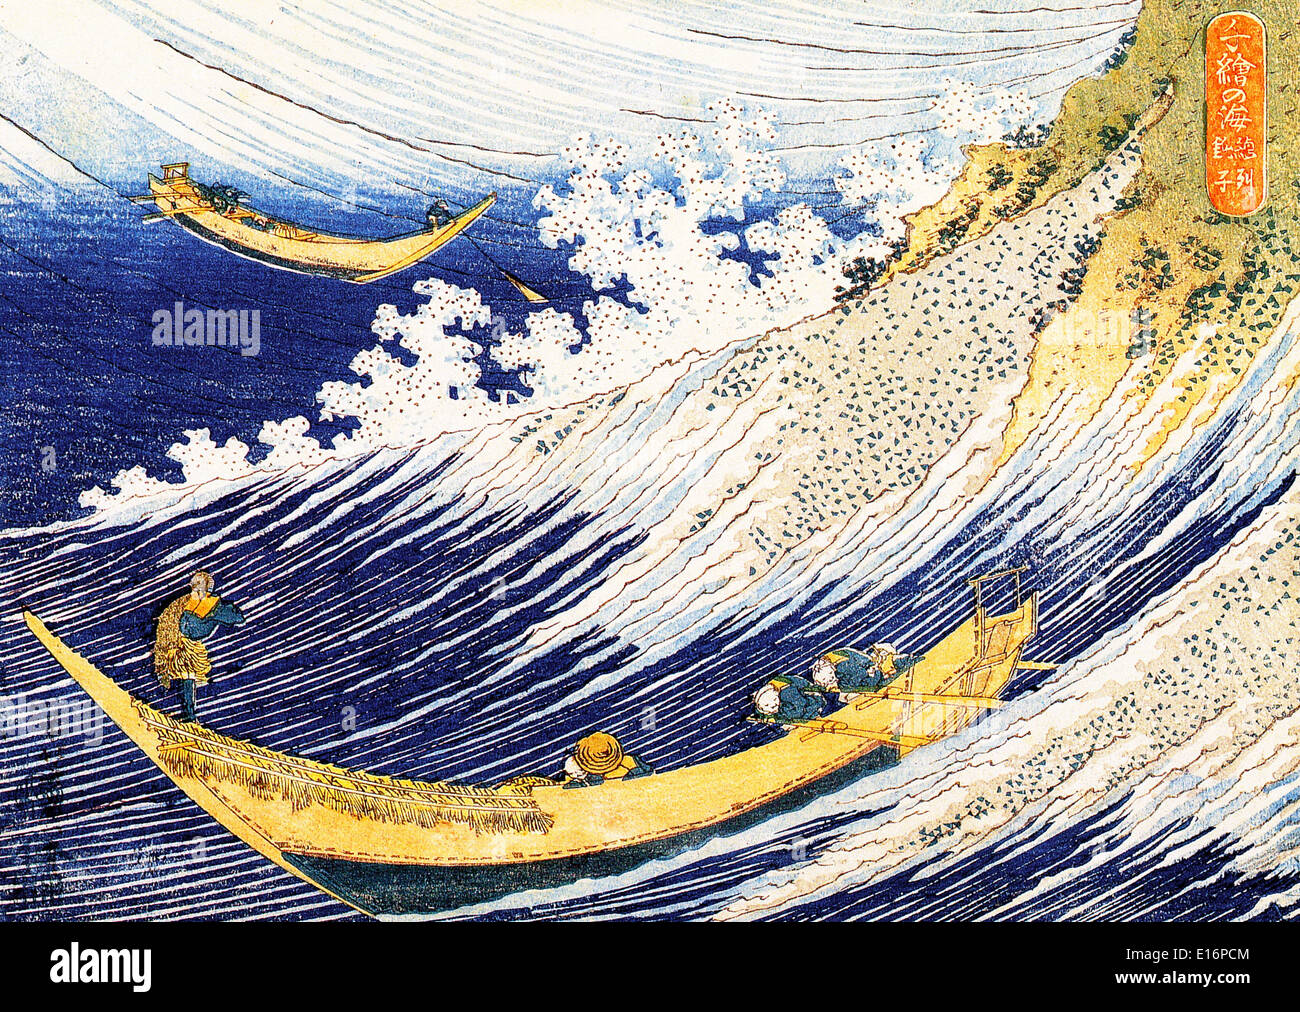 Japanese hokusai hi-res stock photography and images - Alamy